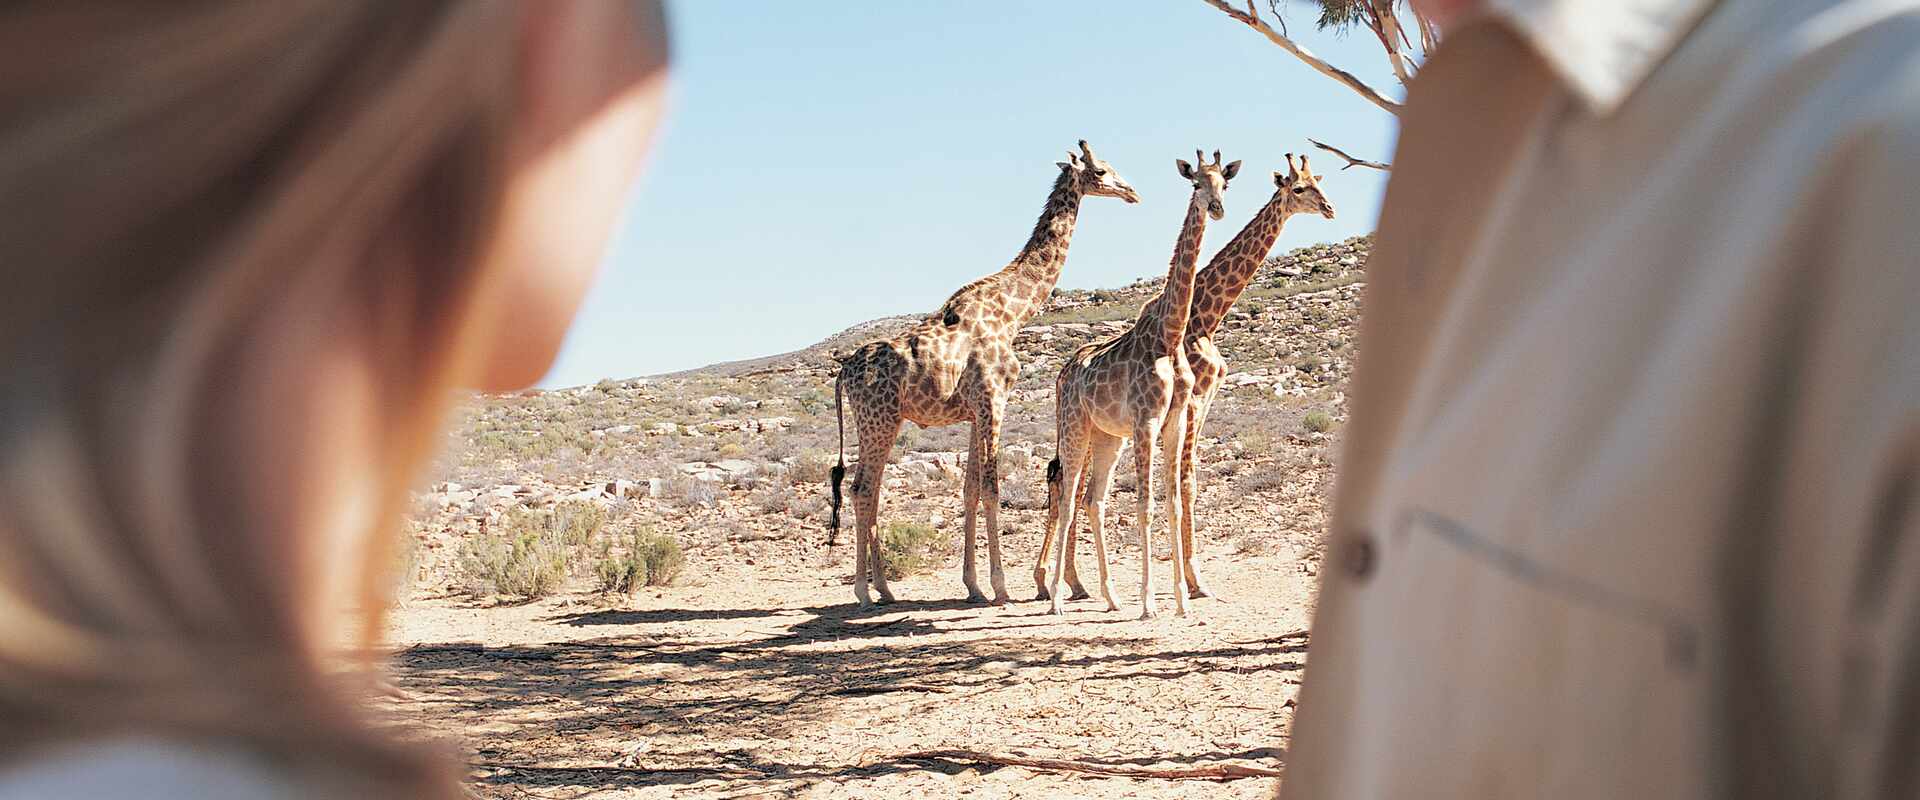 pax couple giraffe safari game drive, africa